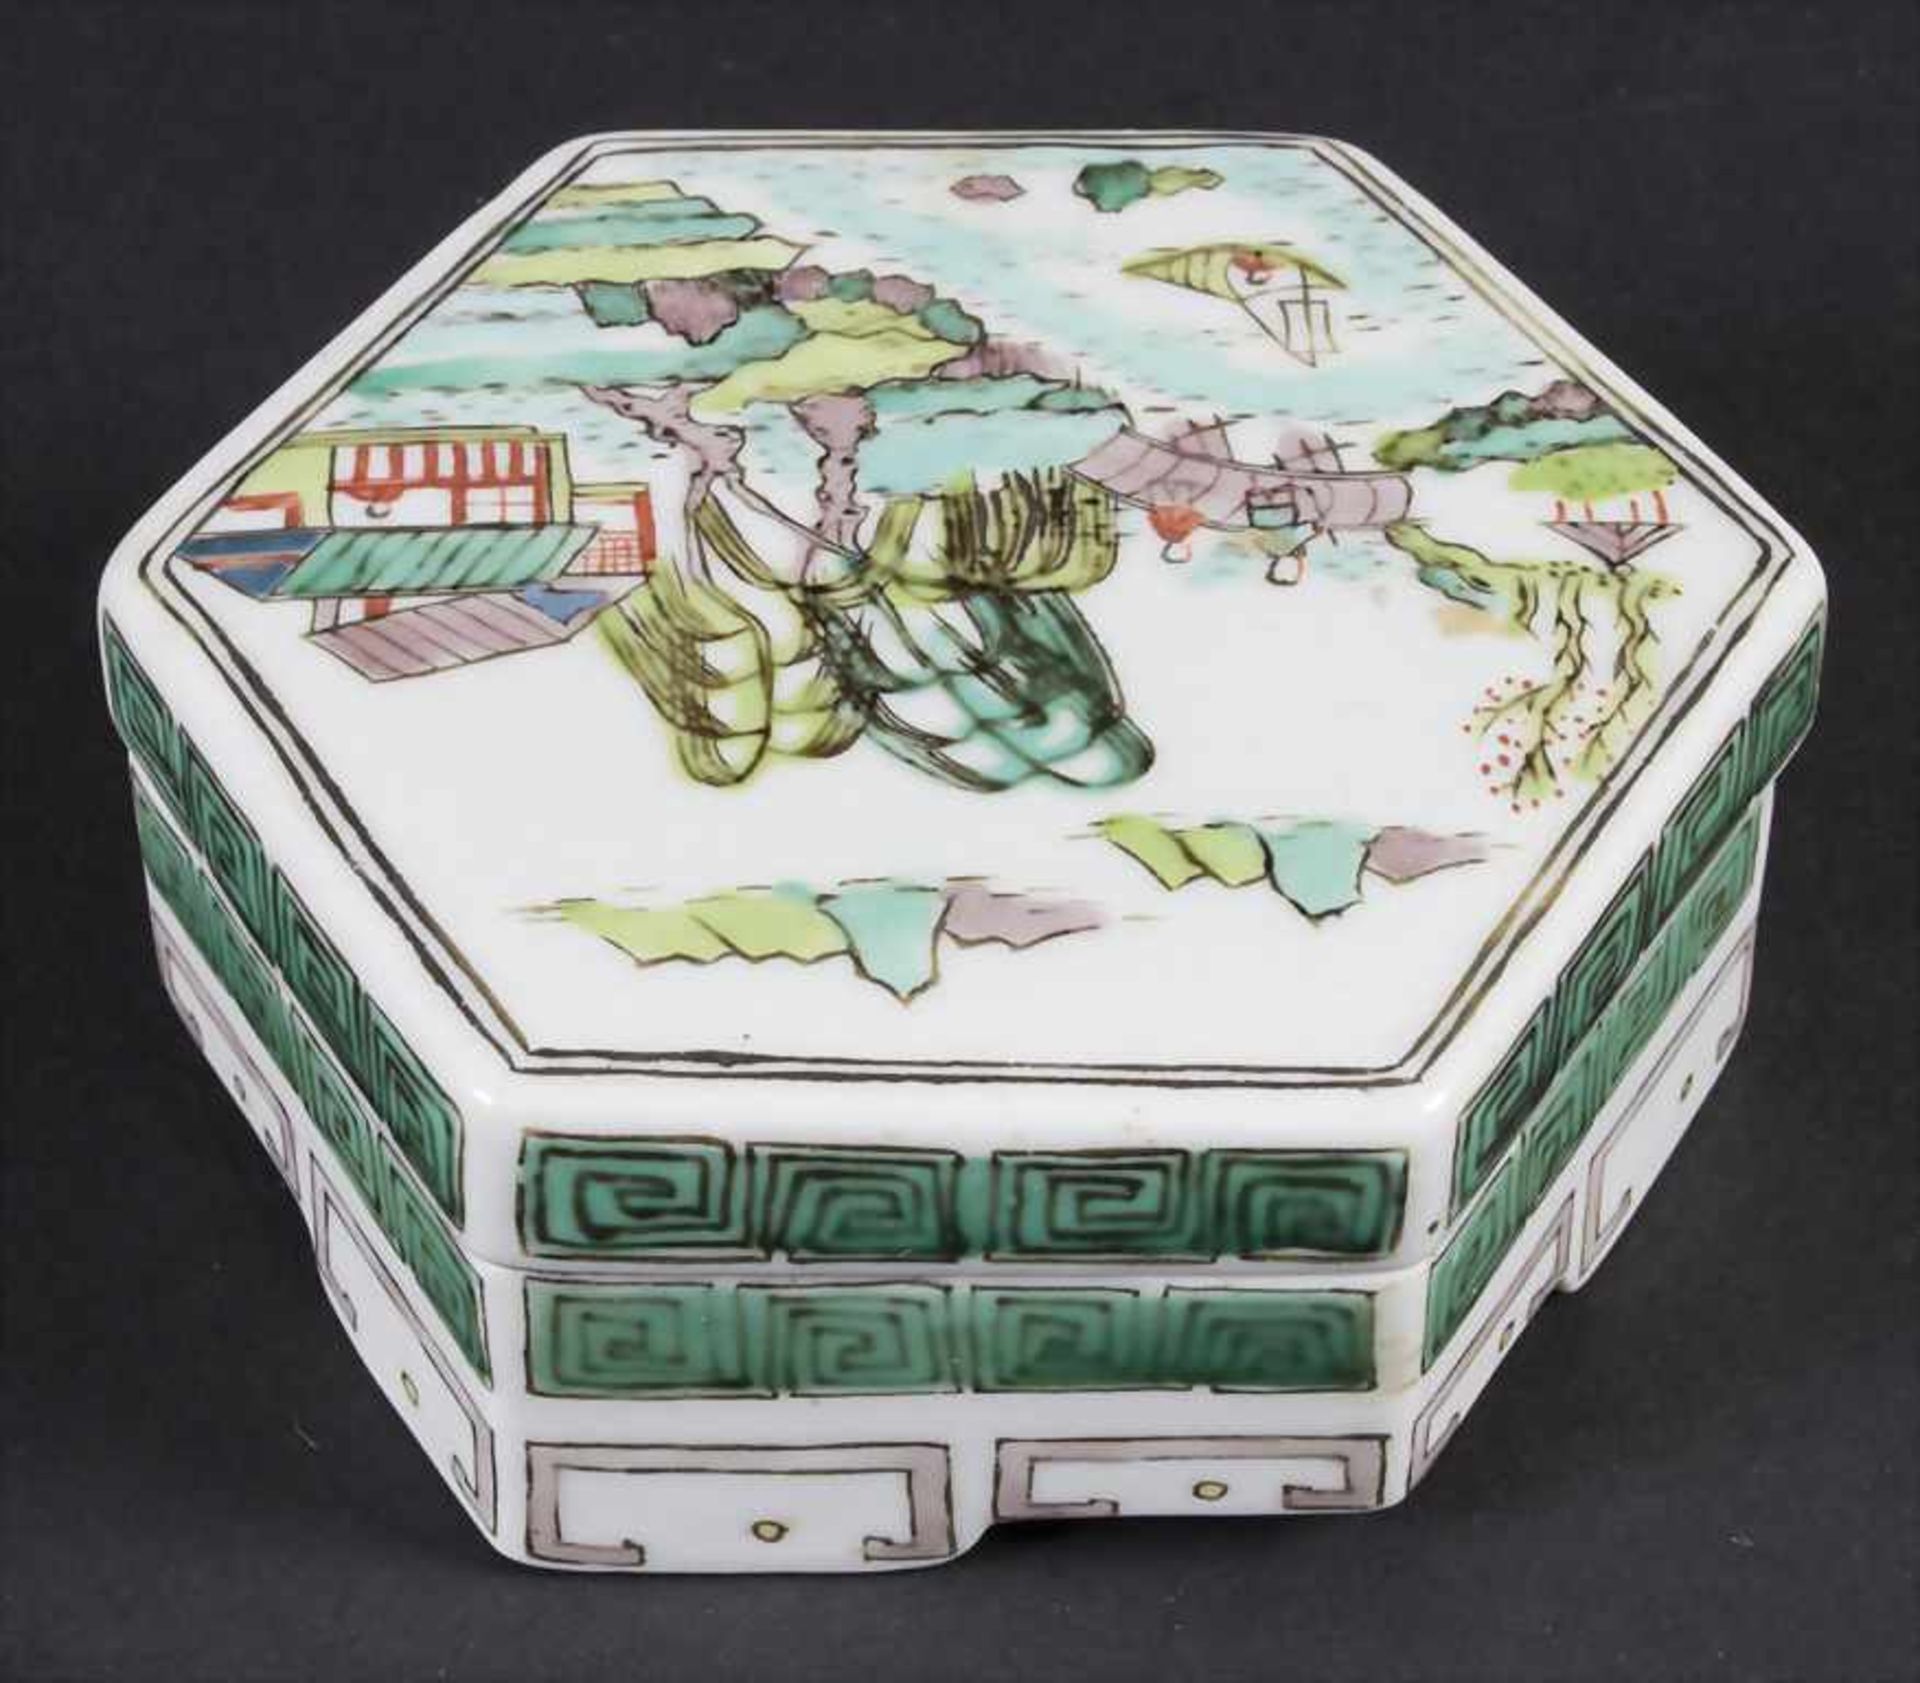 Porzellan-Deckeldose / A porcelain lidded box, China, Qing-Dynastie, wohl 18. Jh. - Image 2 of 5